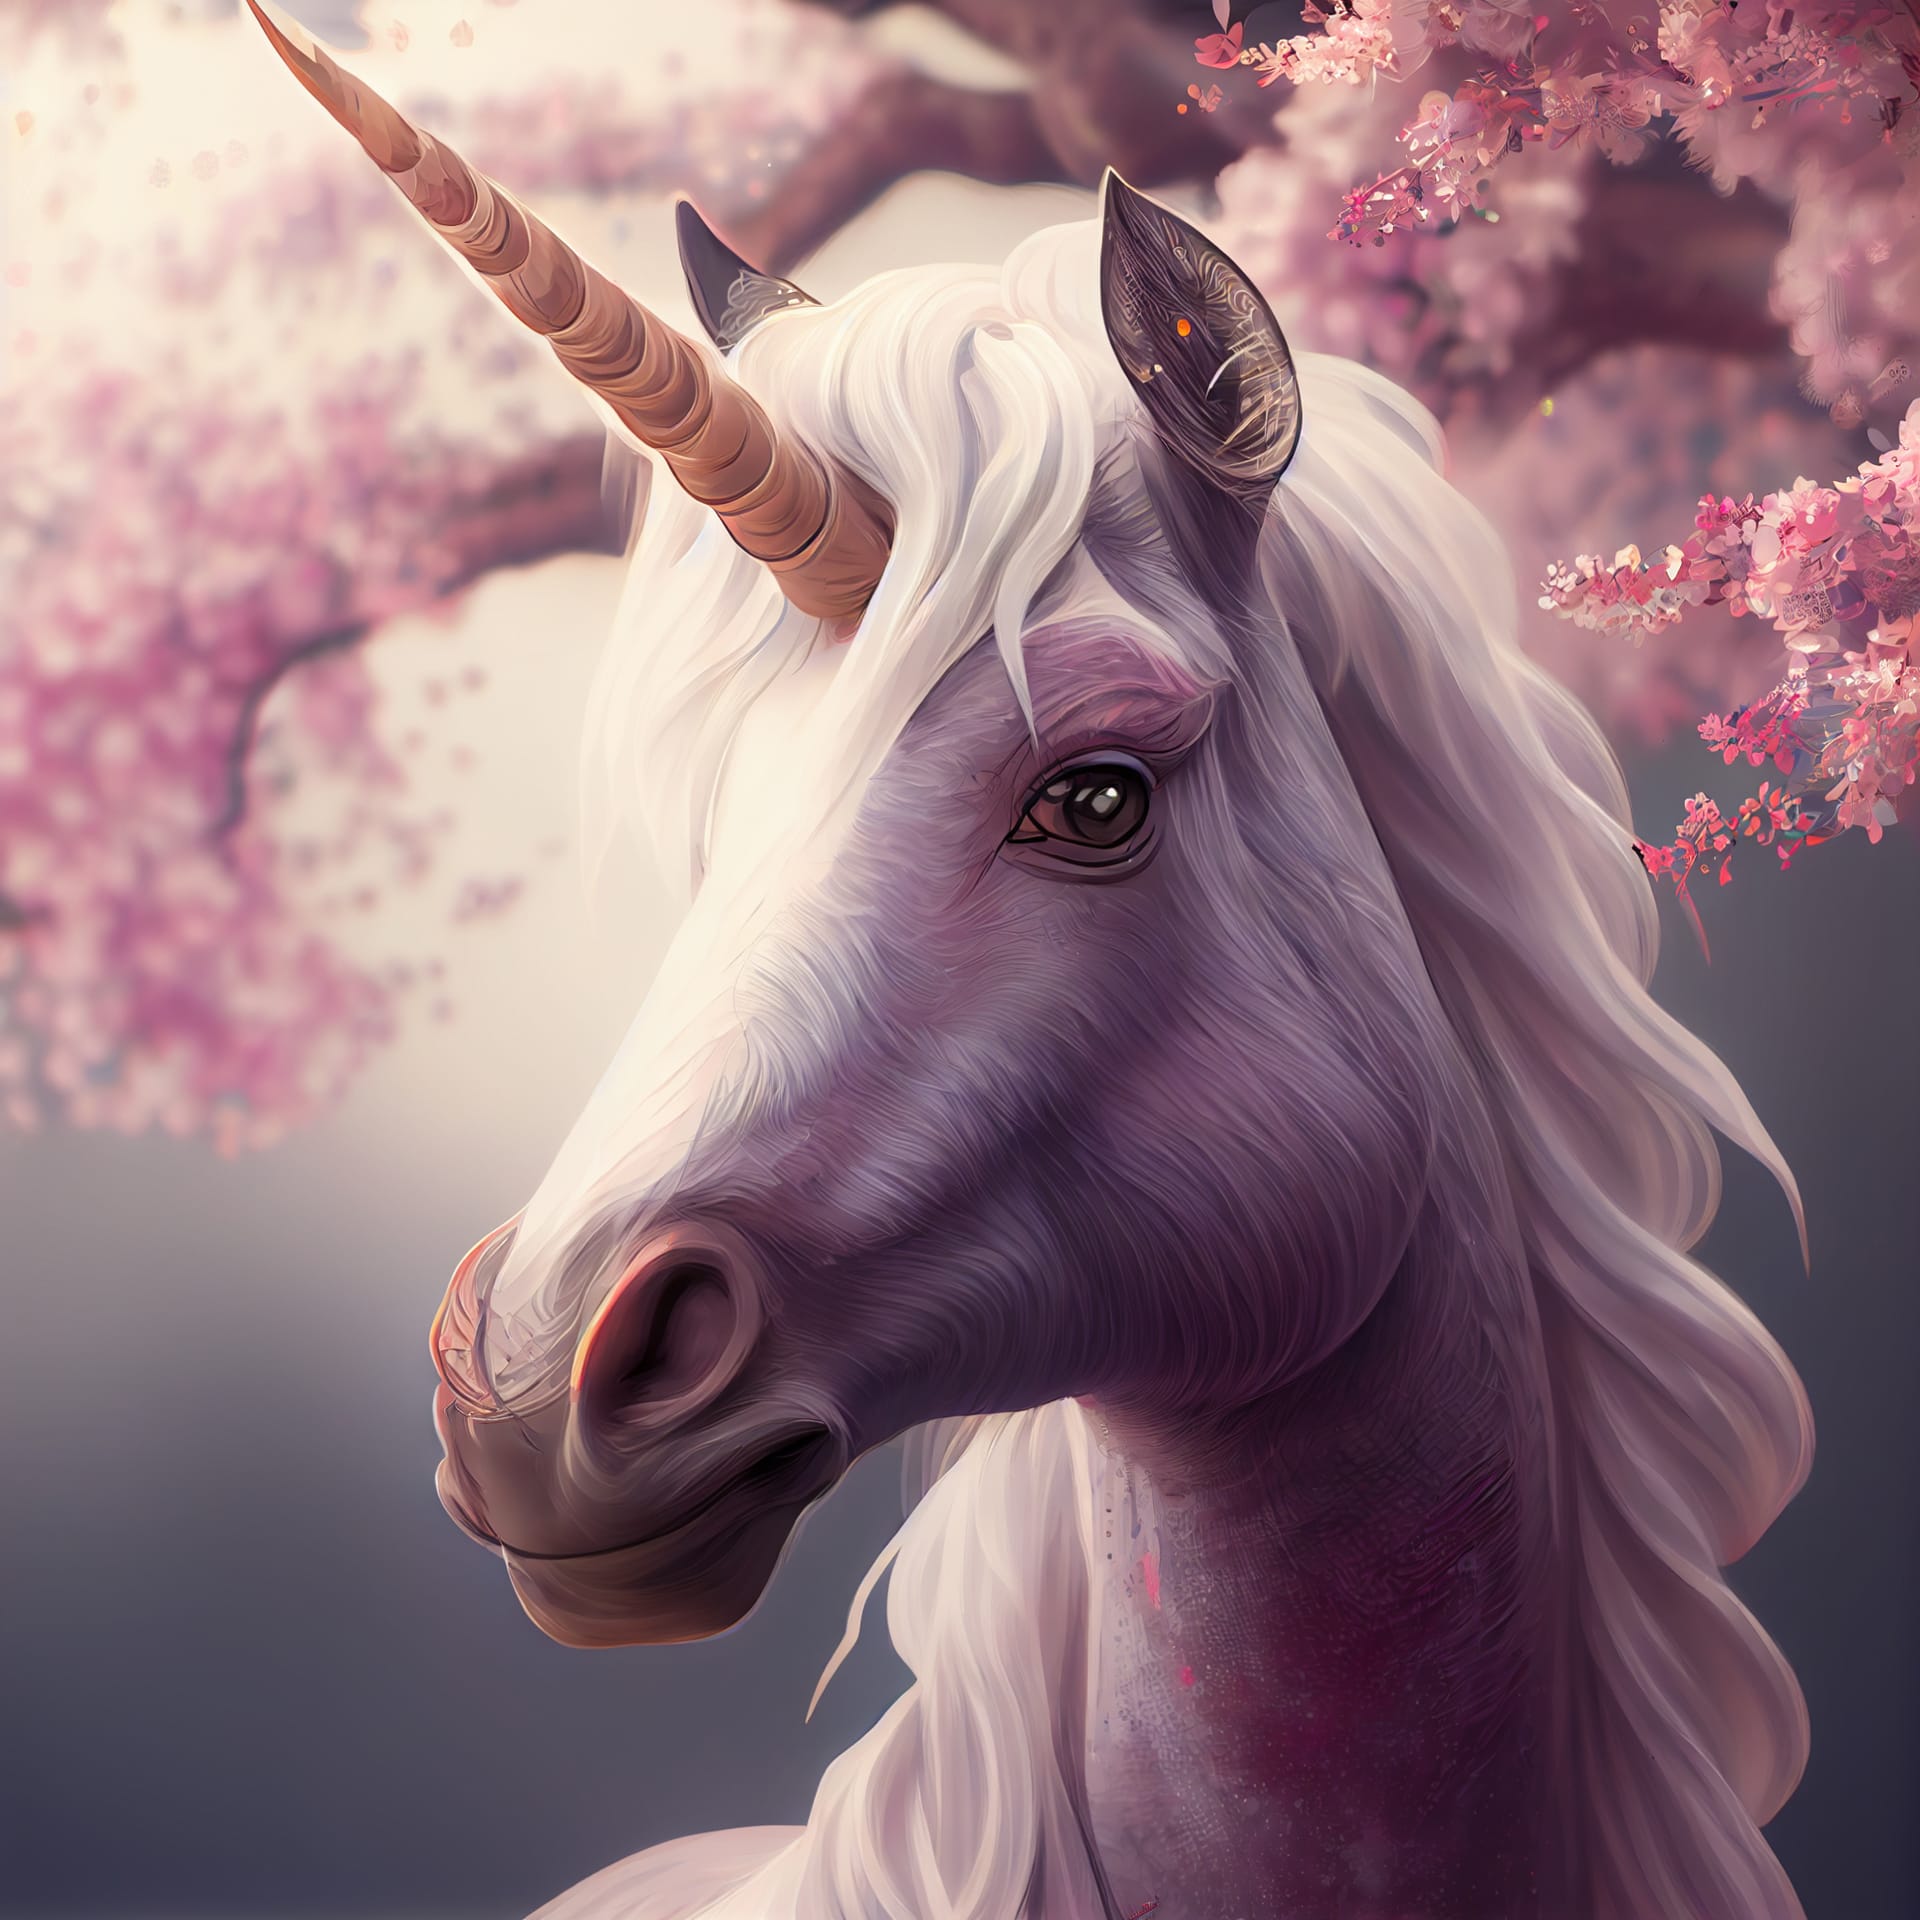 Cute fantasy unicorn cherry blossom sakura tree illustration